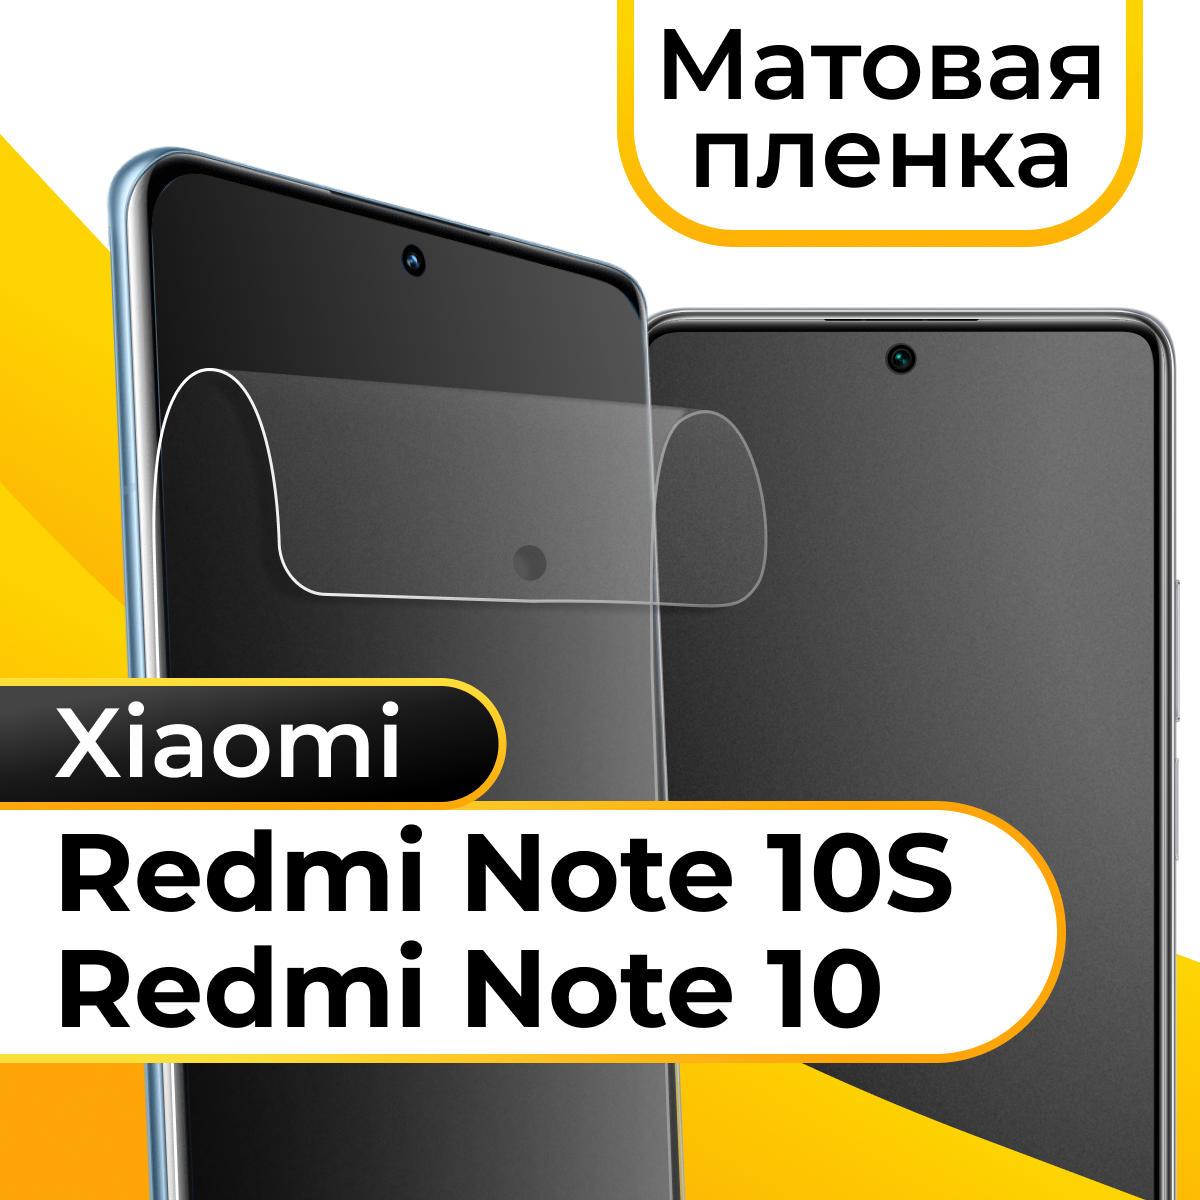 Комплект 2 шт. Матовая пленка для смартфона Xiaomi Redmi Note 10 и Redmi Note 10s / Защитная противоударная пленка на телефон Сяоми Редми Нот 10 и Нот 10с